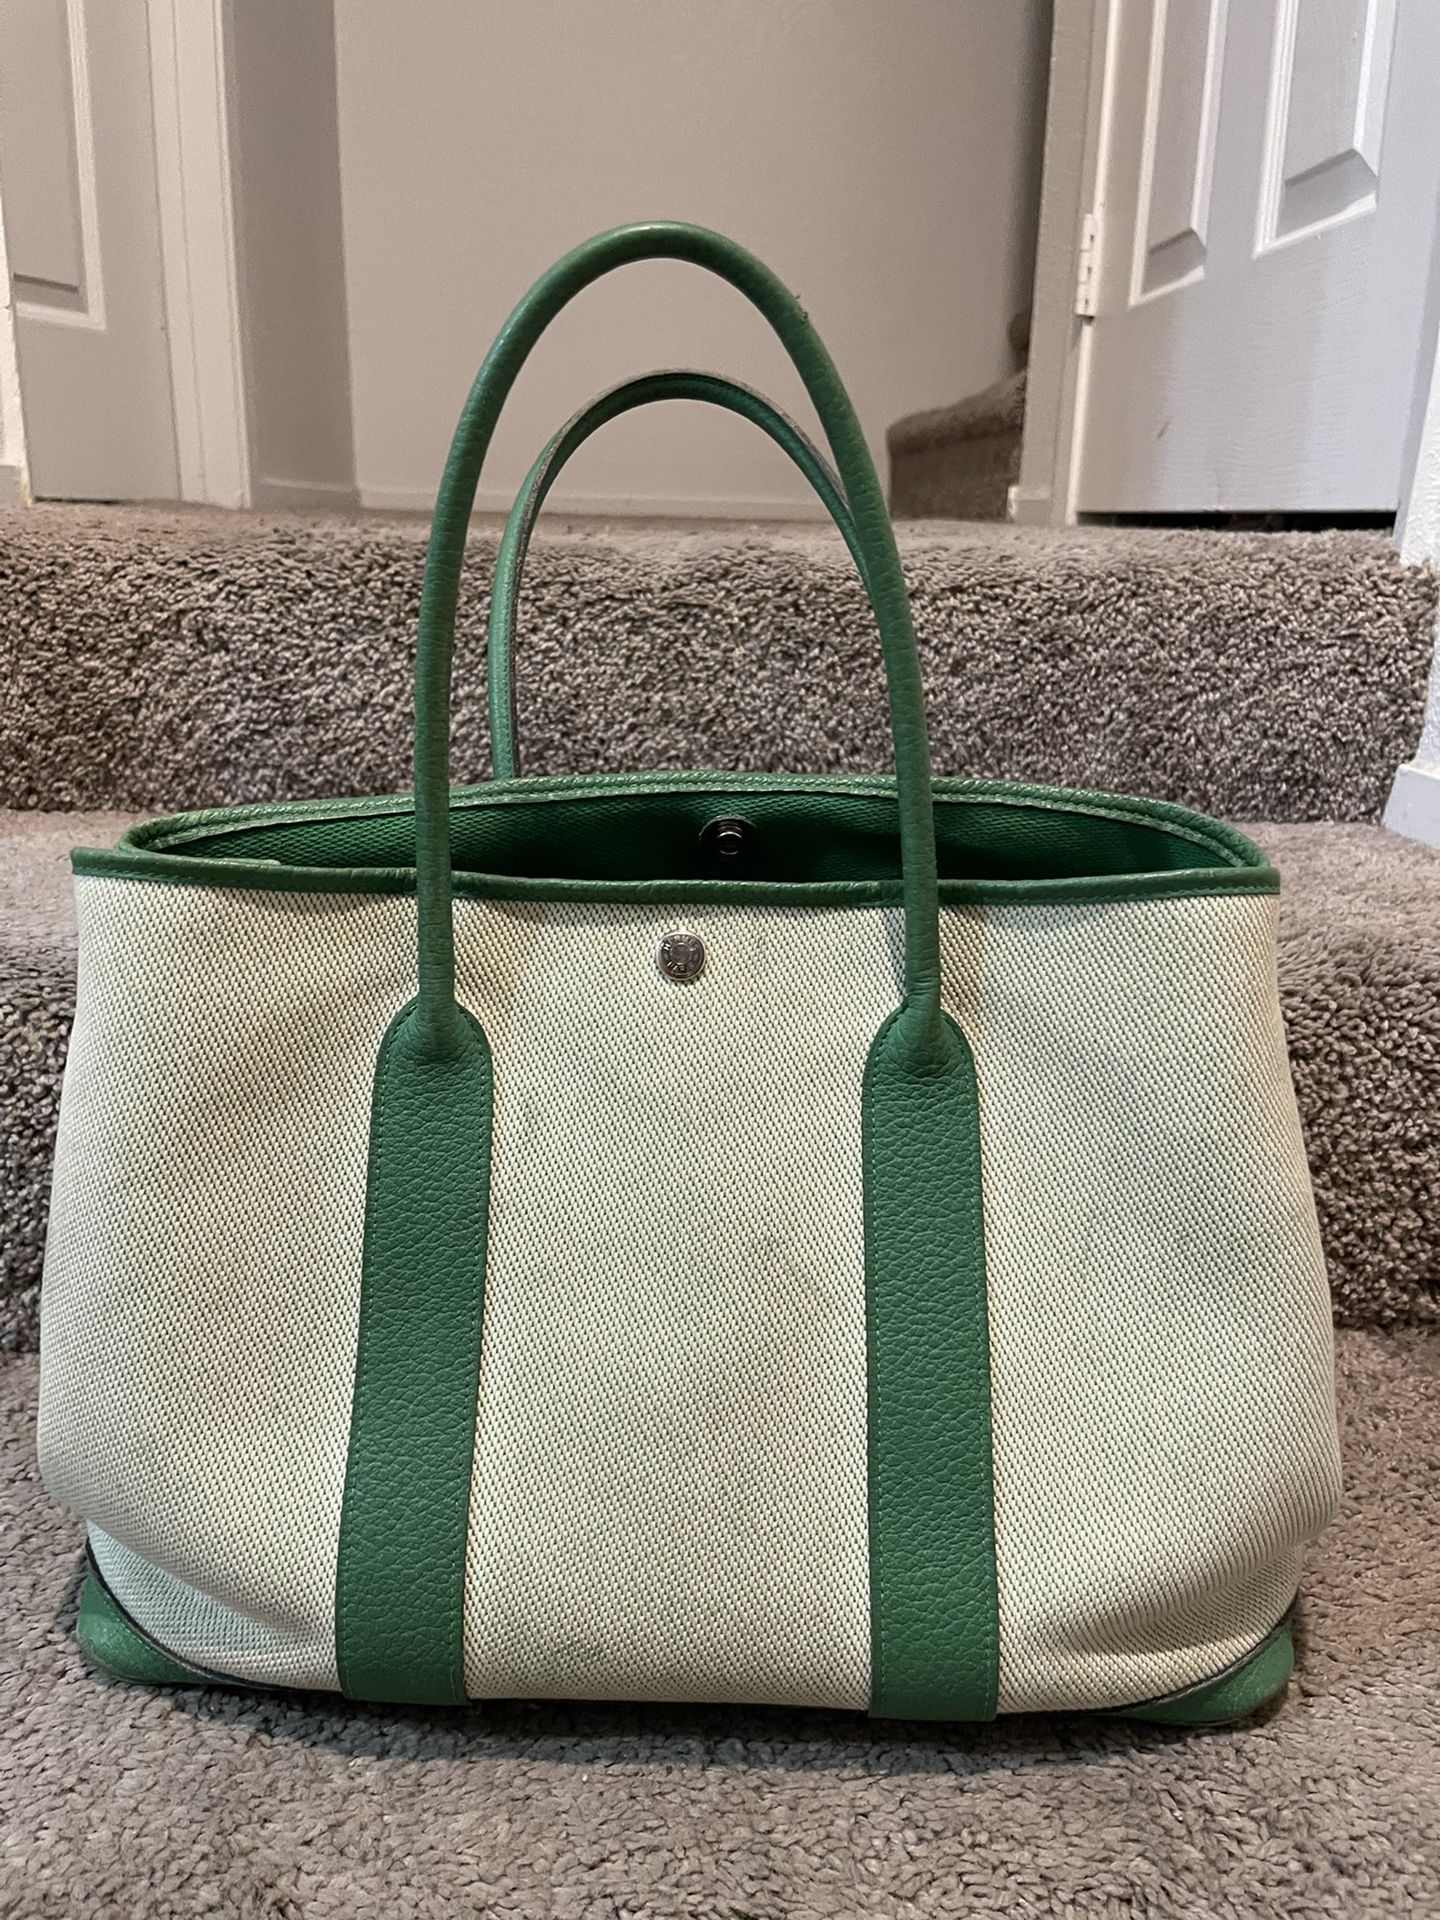 Green Hermes Tote Bag